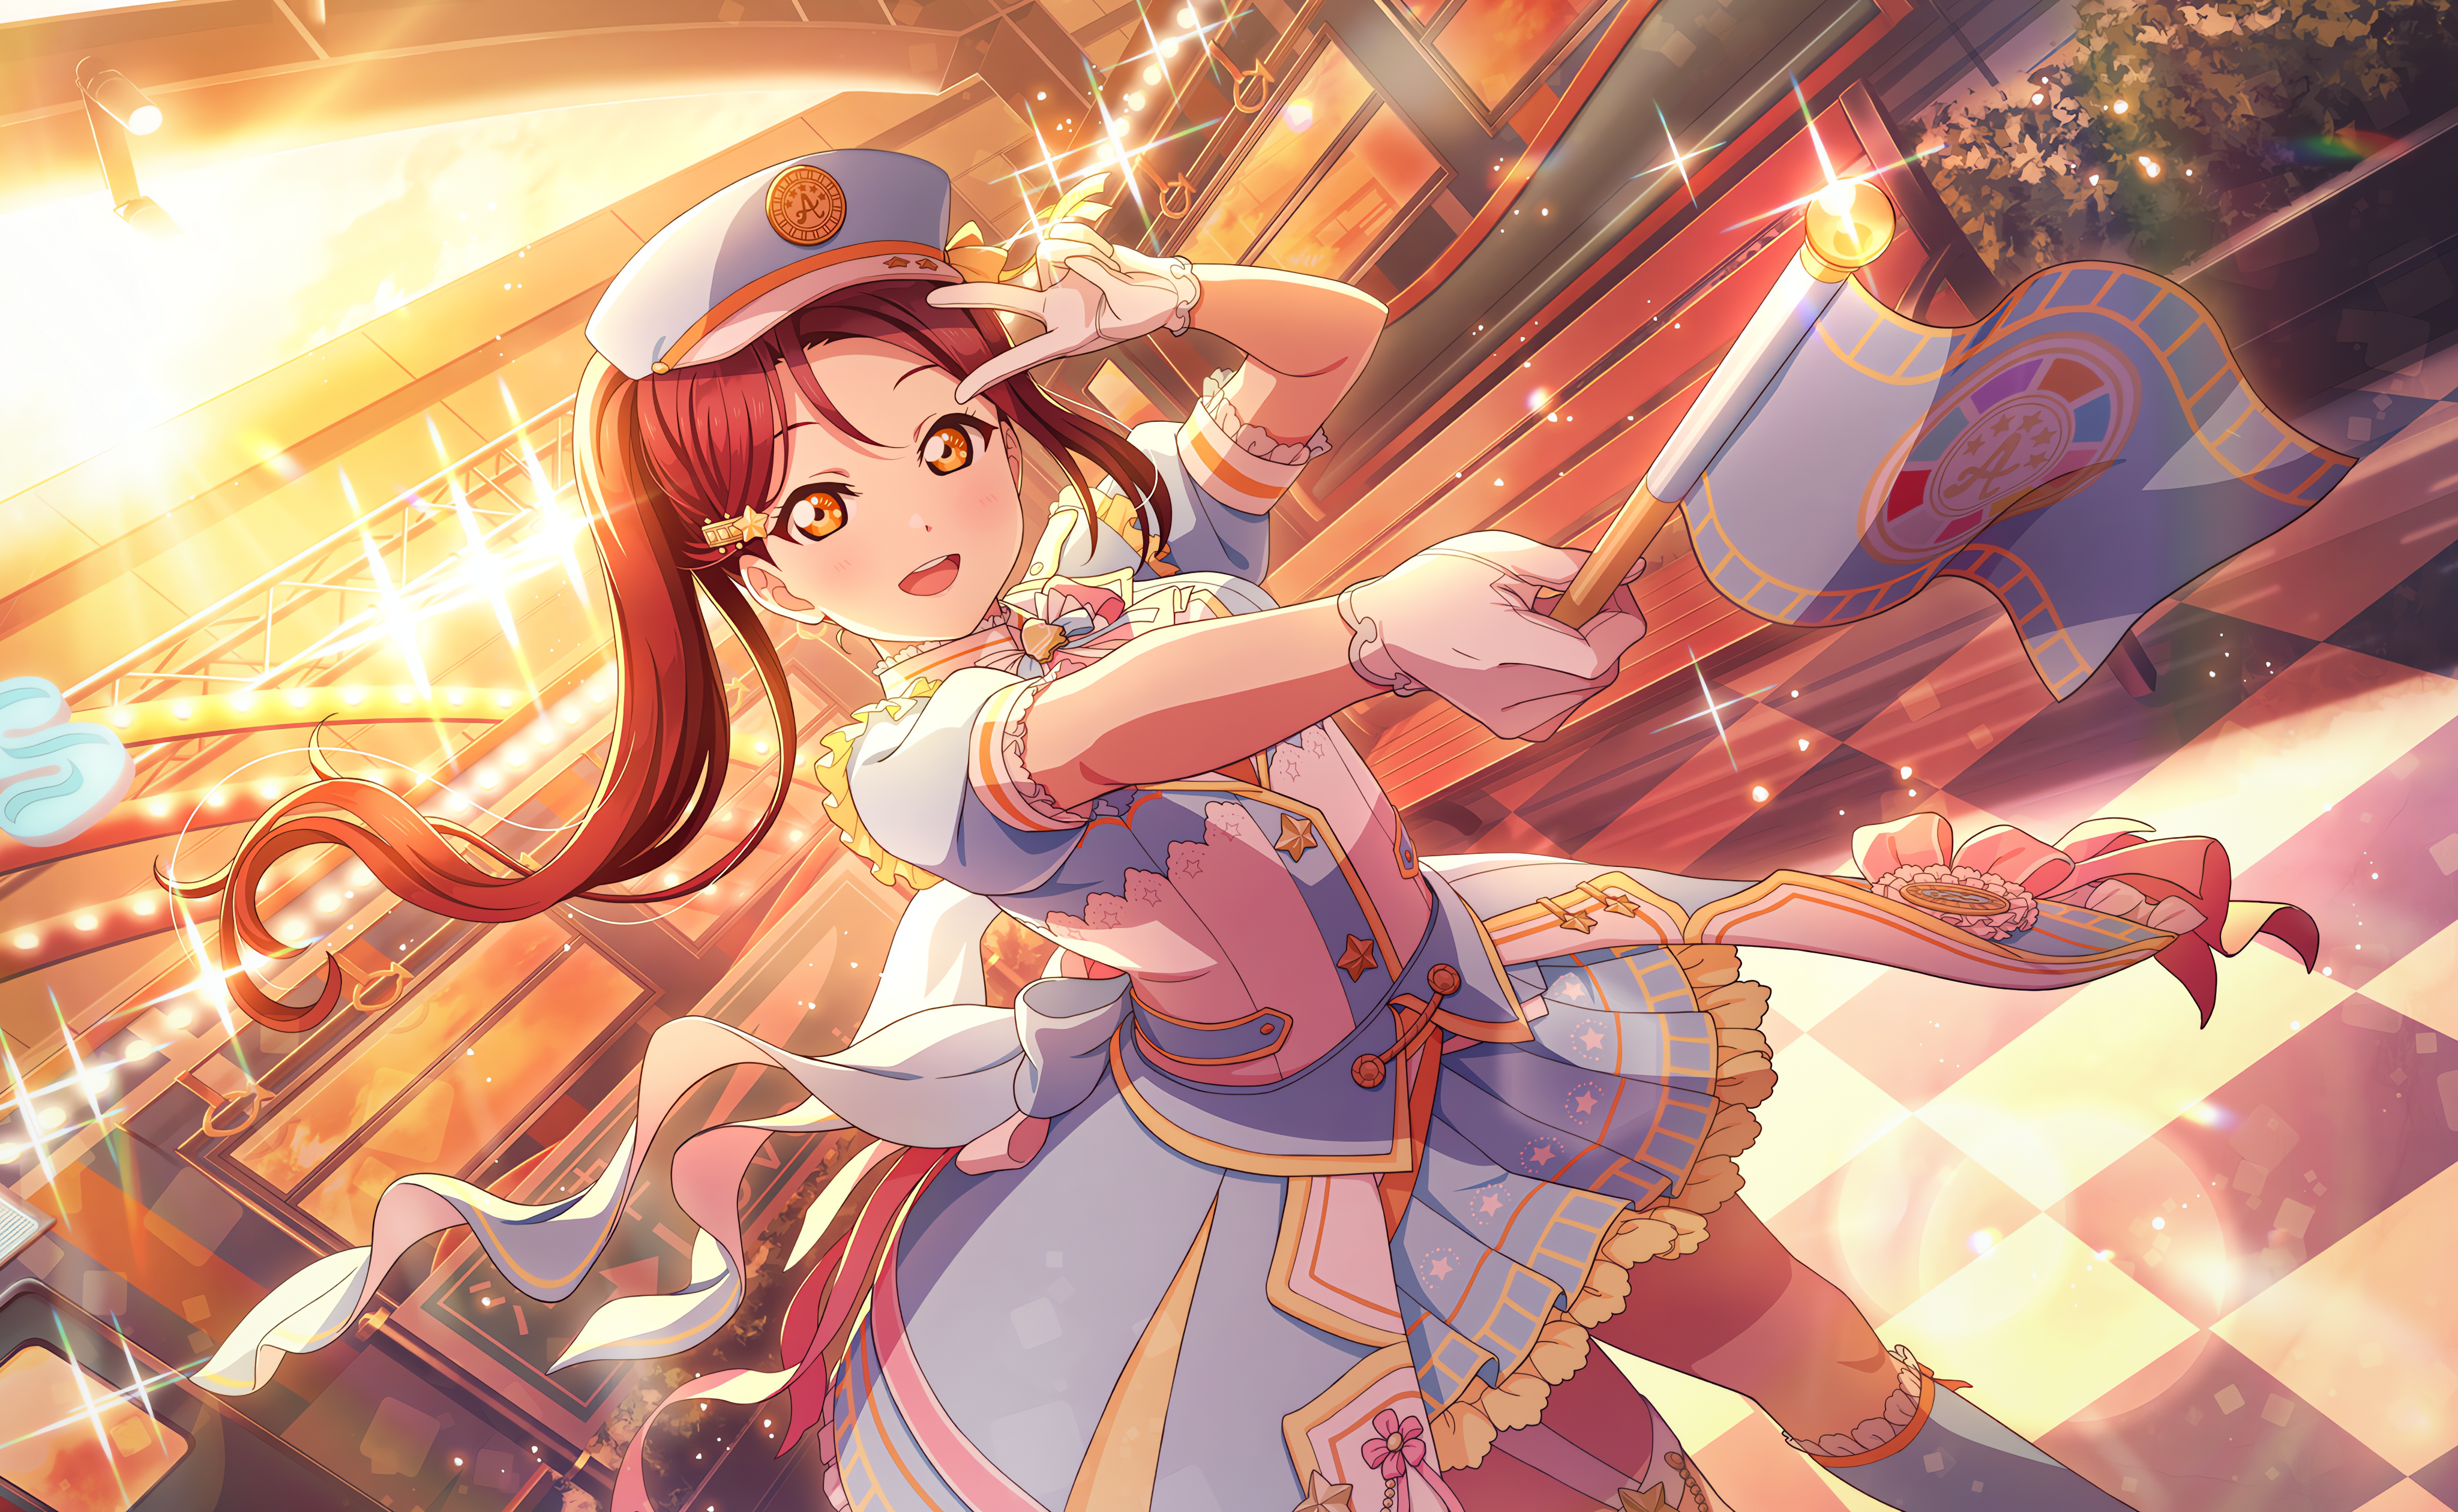 Anime 4096x2520 Sakurauchi Riko Love Live! Love Live! Sunshine anime anime girls uniform flag hat peace sign gloves looking at viewer checkered long hair sunset glow stars stage light